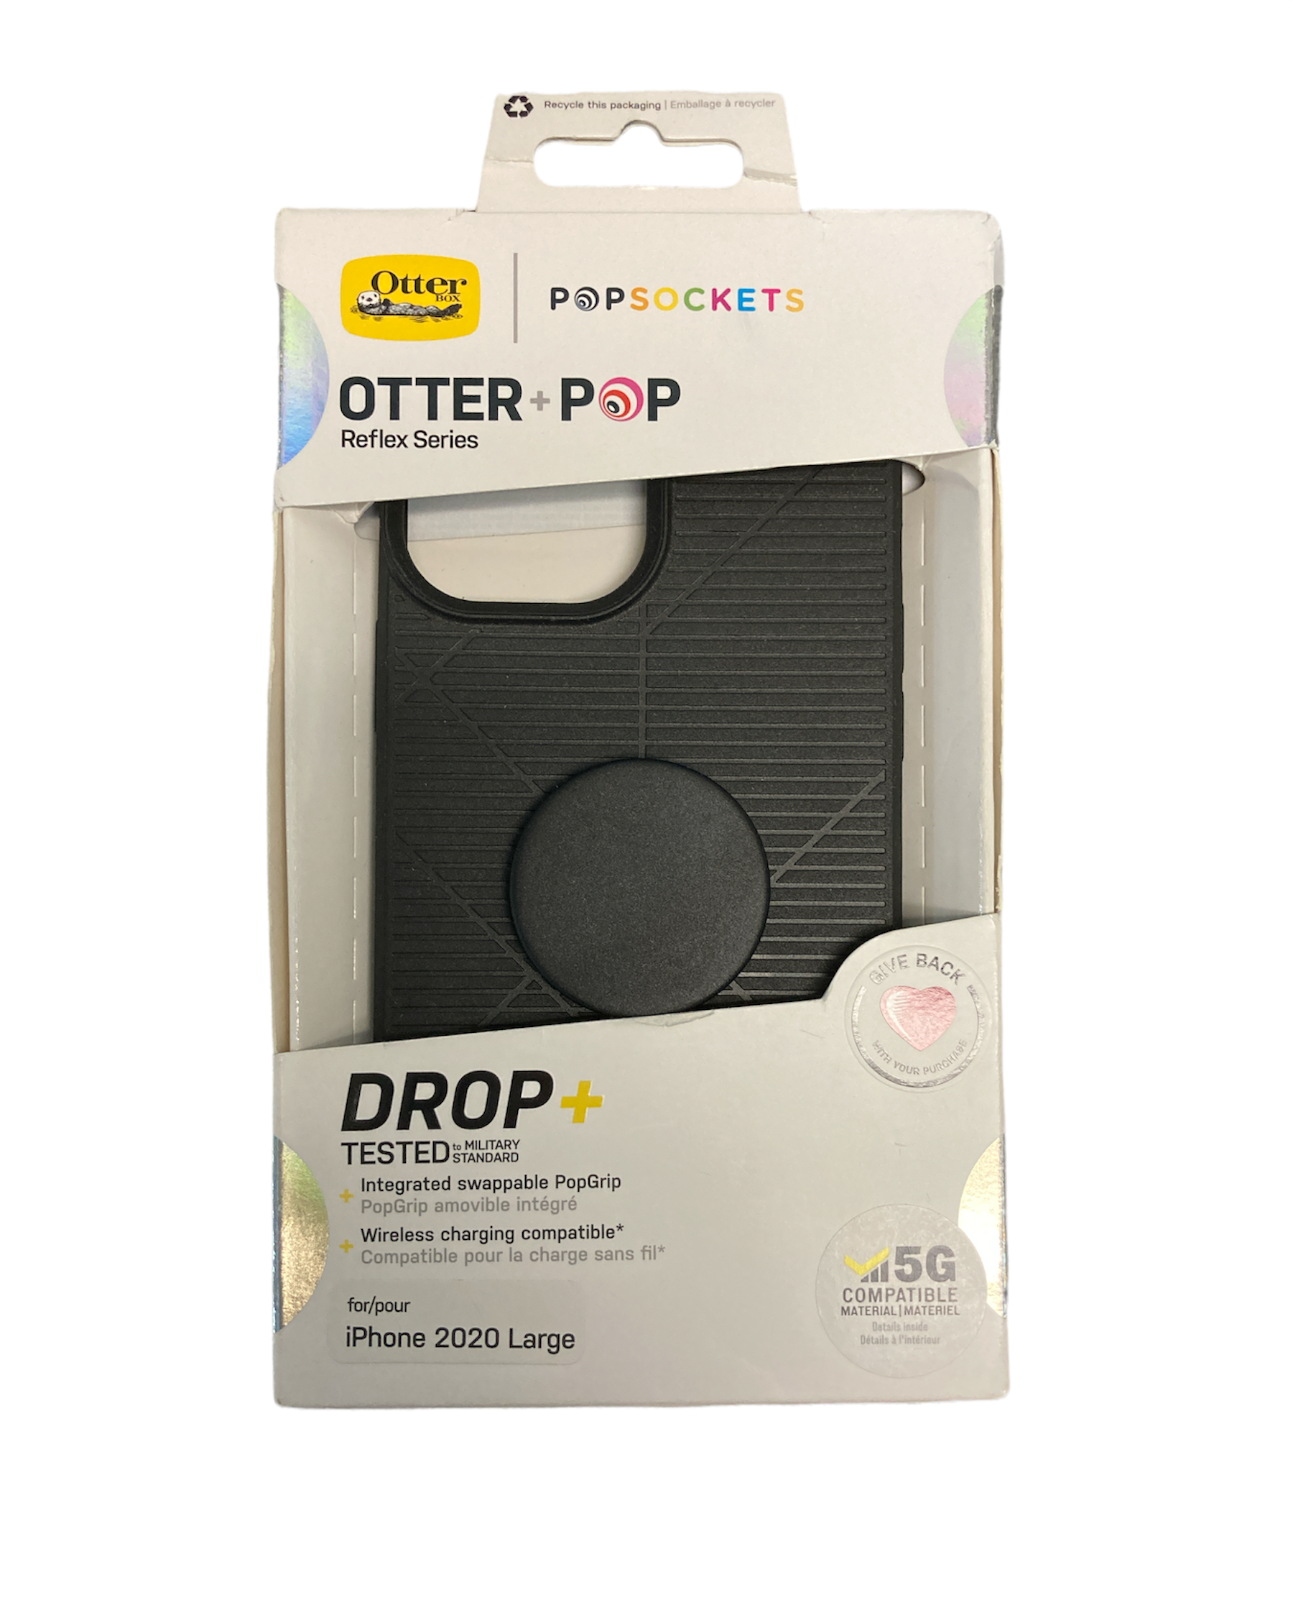 OTTERBOX Otter Pop Reflex 77-80154 Cover Case for Apple iPhone 12 Pro Max, Black